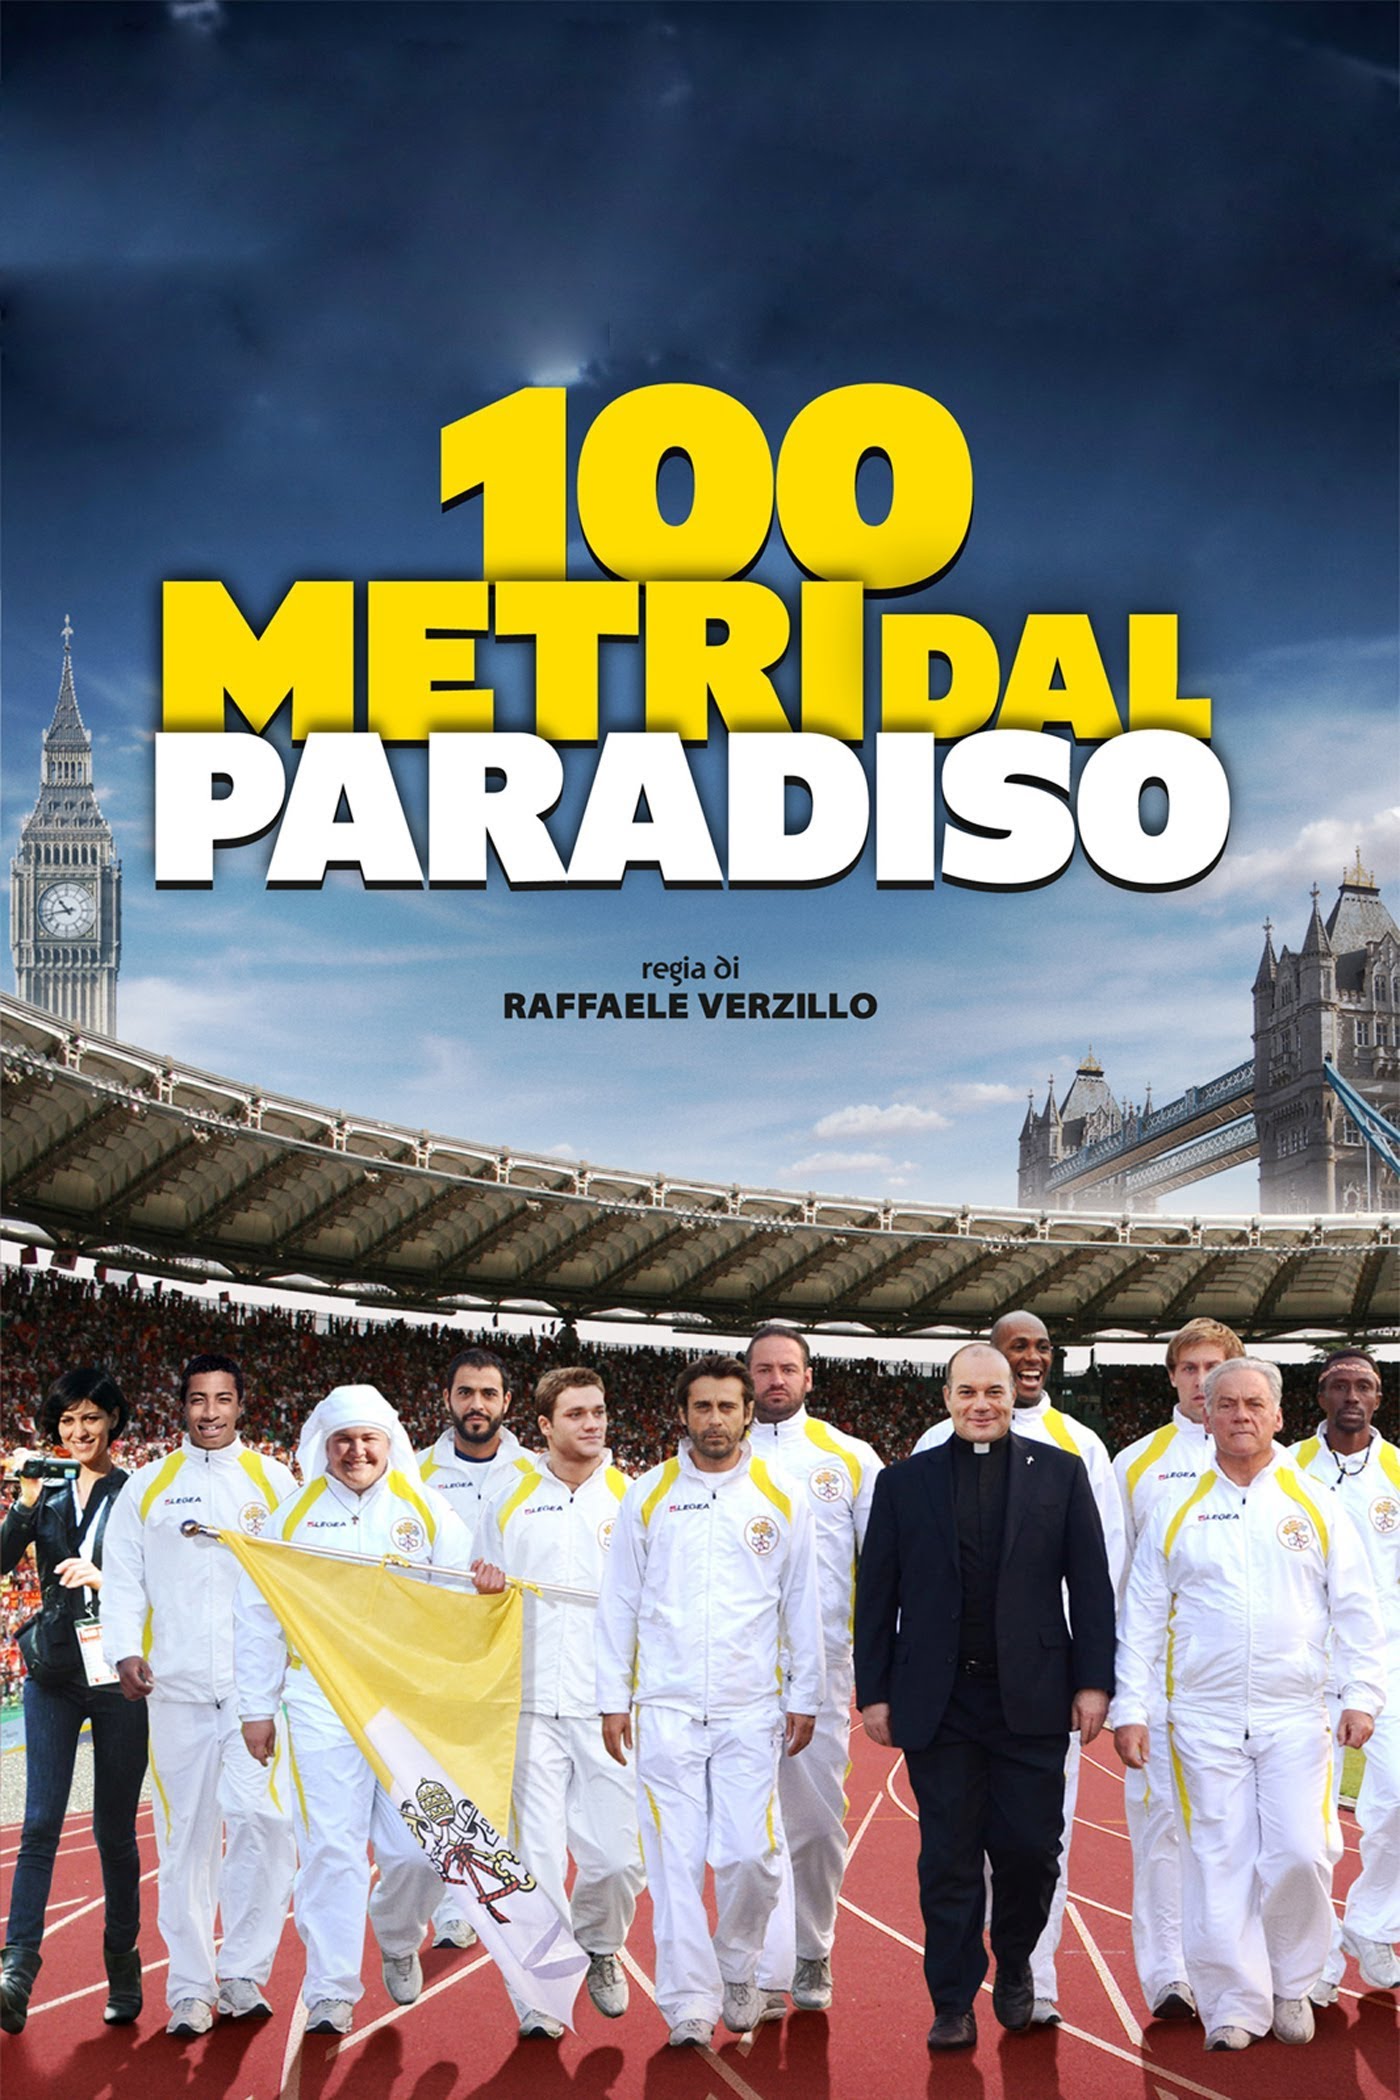 100 metri dal paradiso (2012)